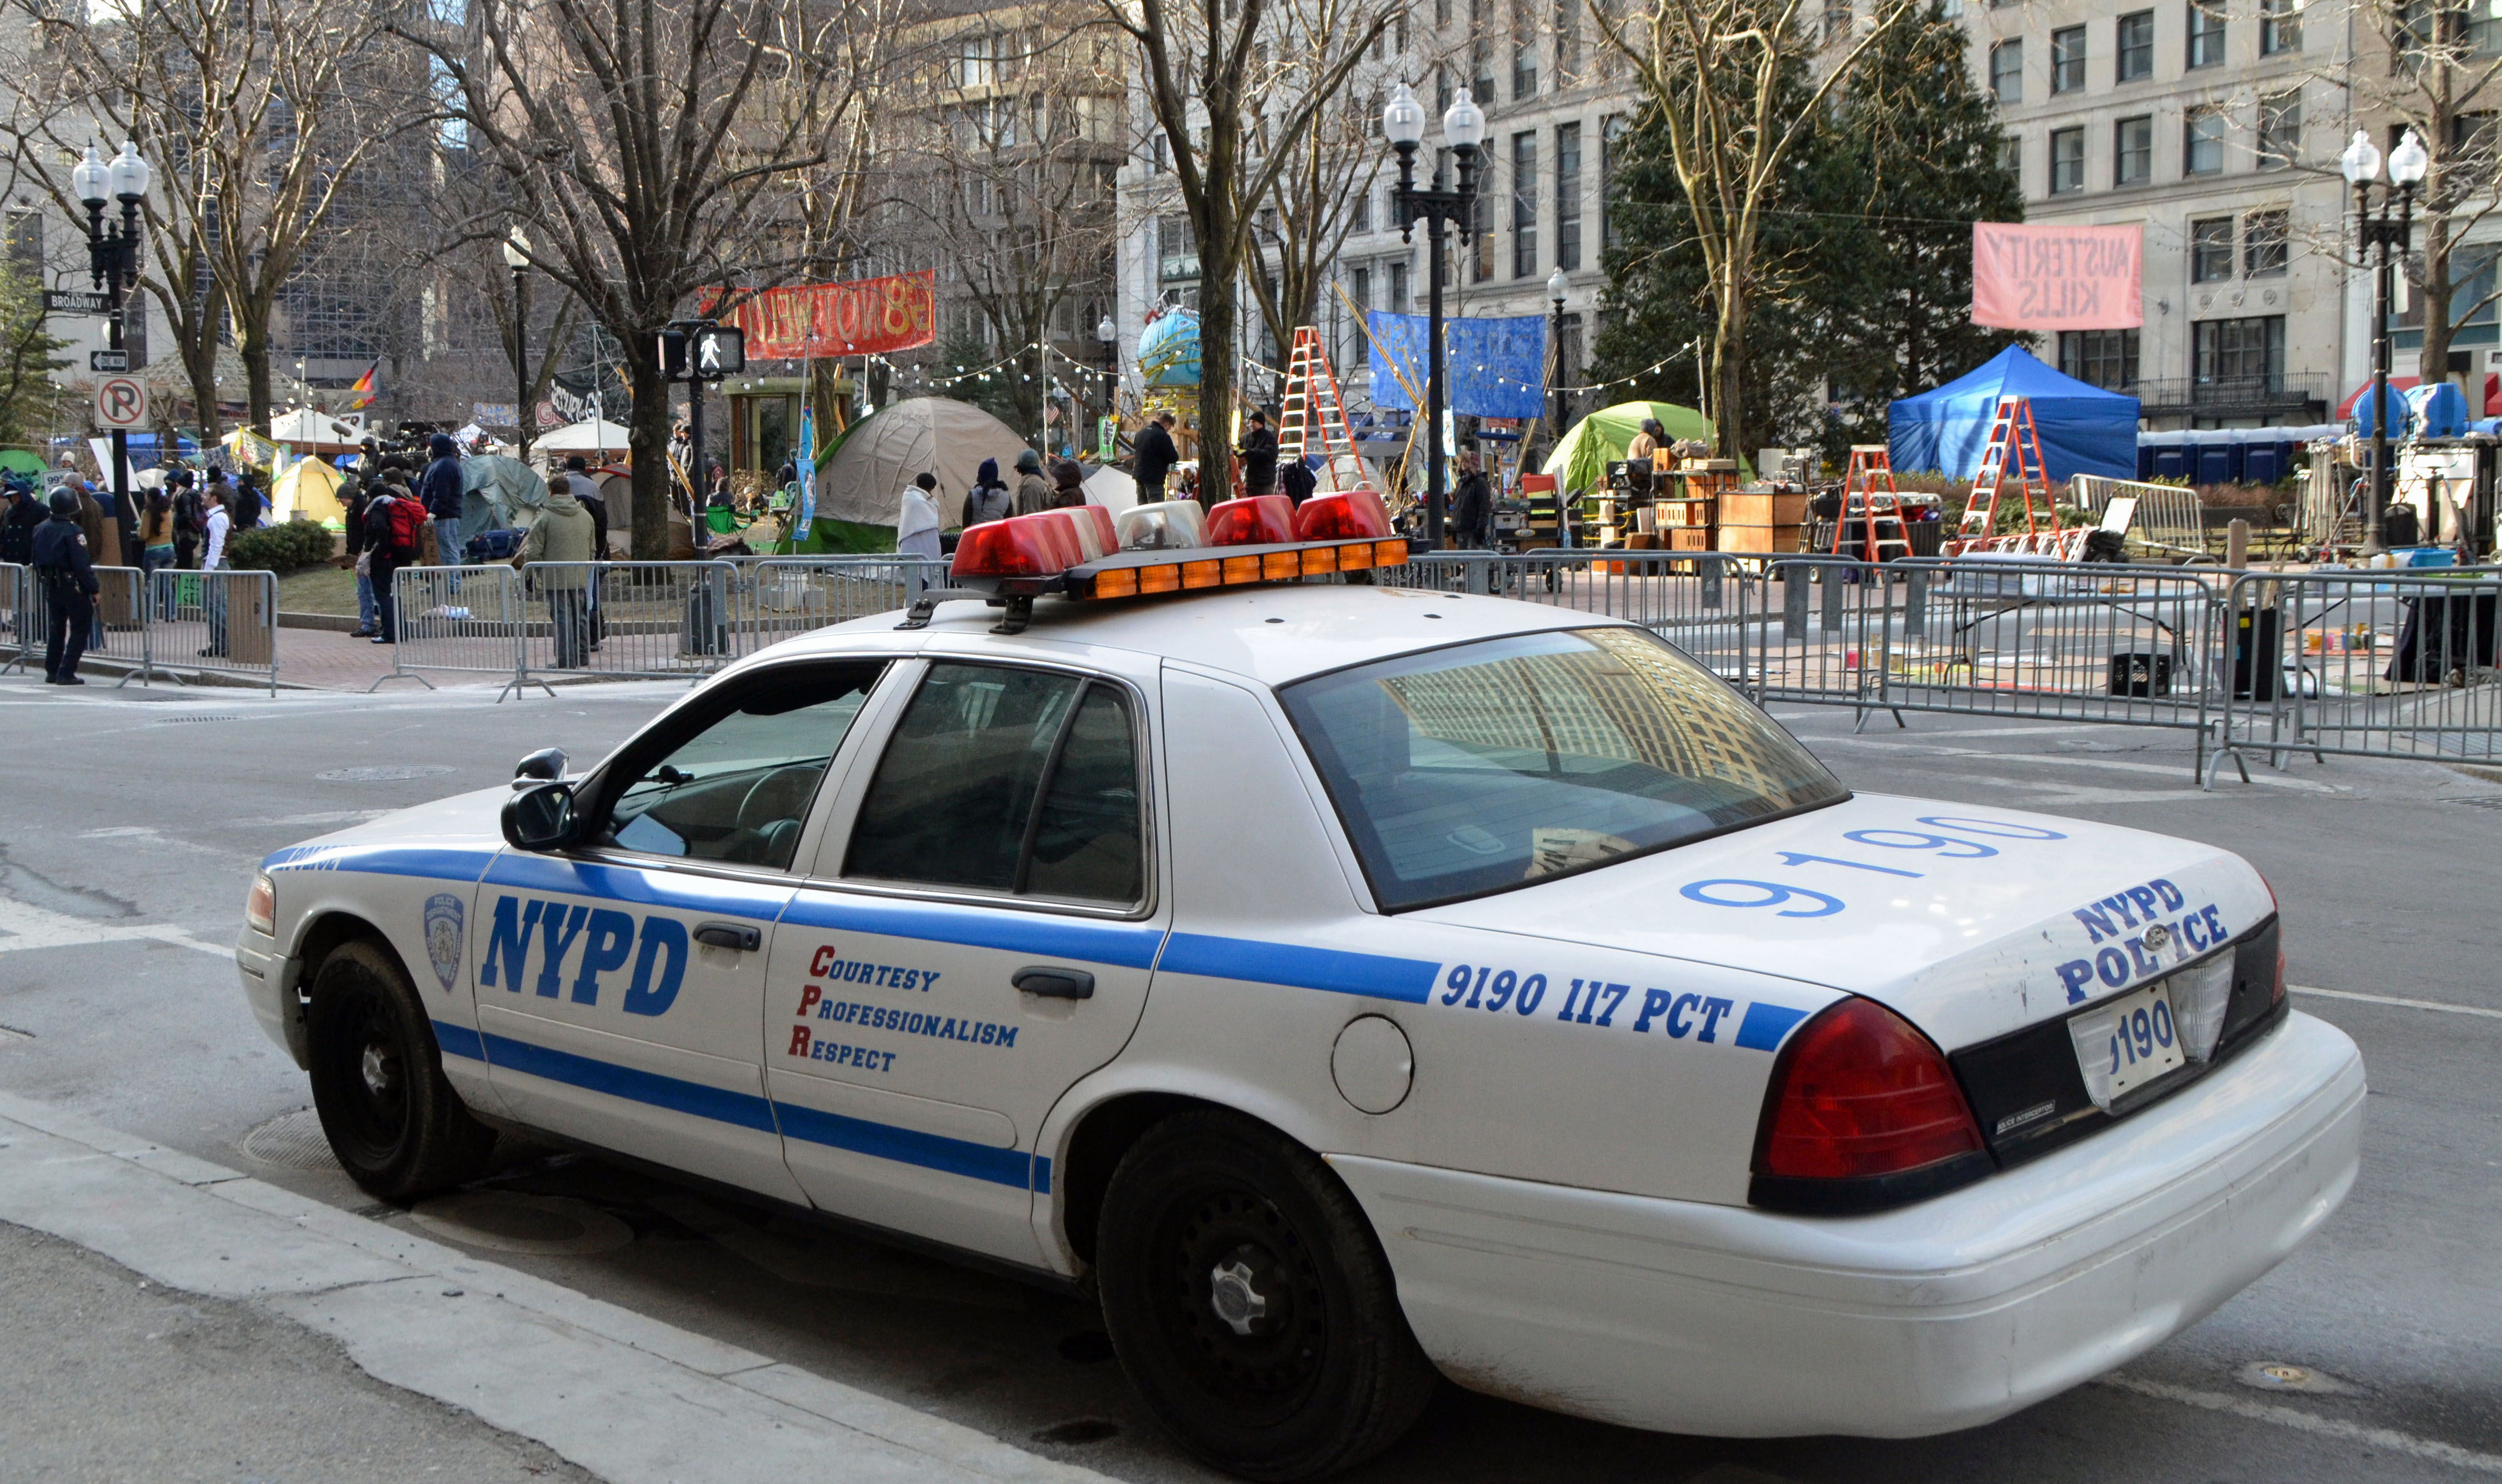 NYPD car in Boston